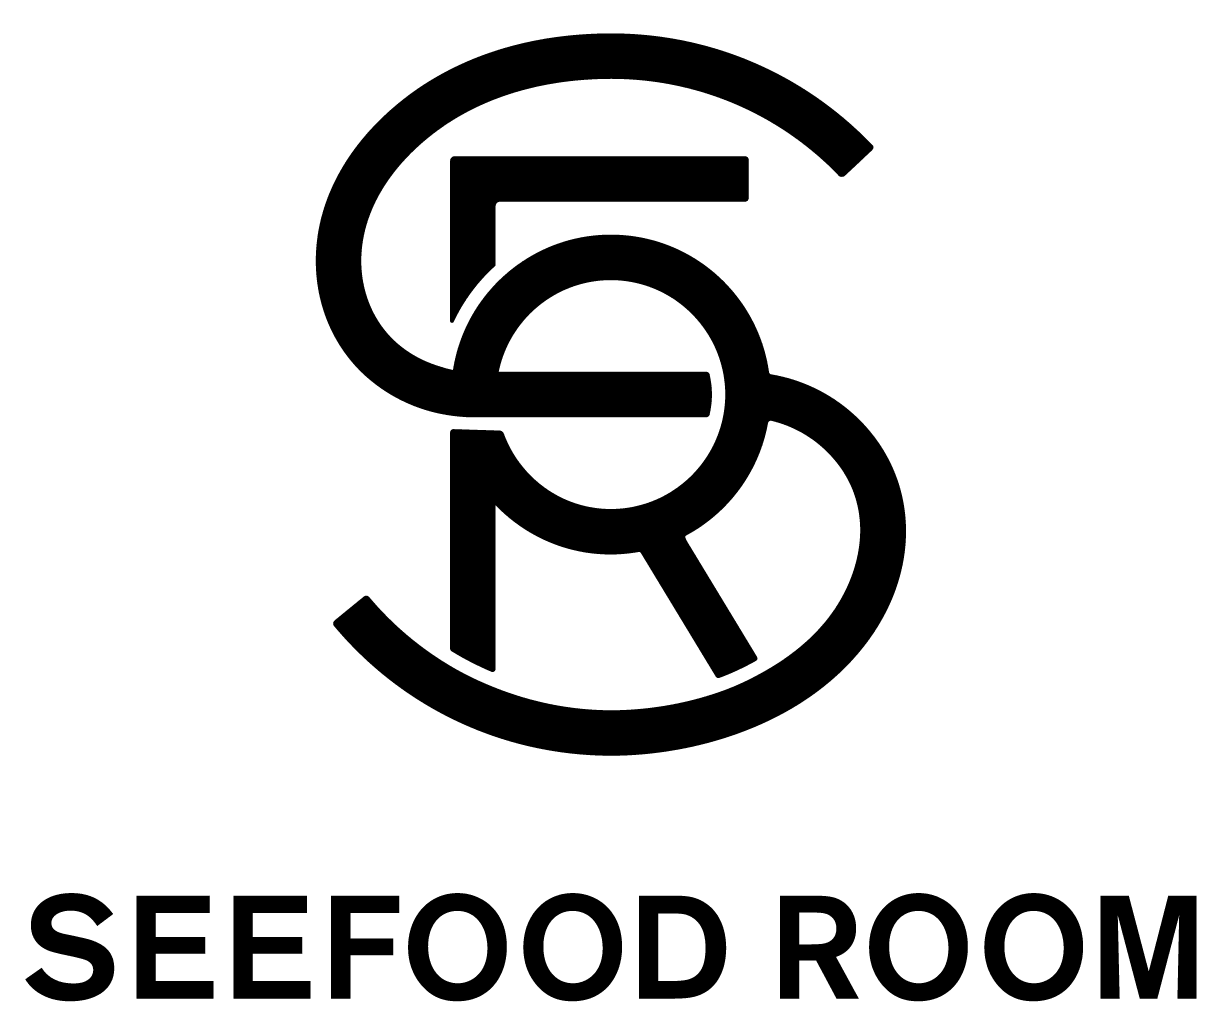 SEEFOOD ROOM Gallery company logo